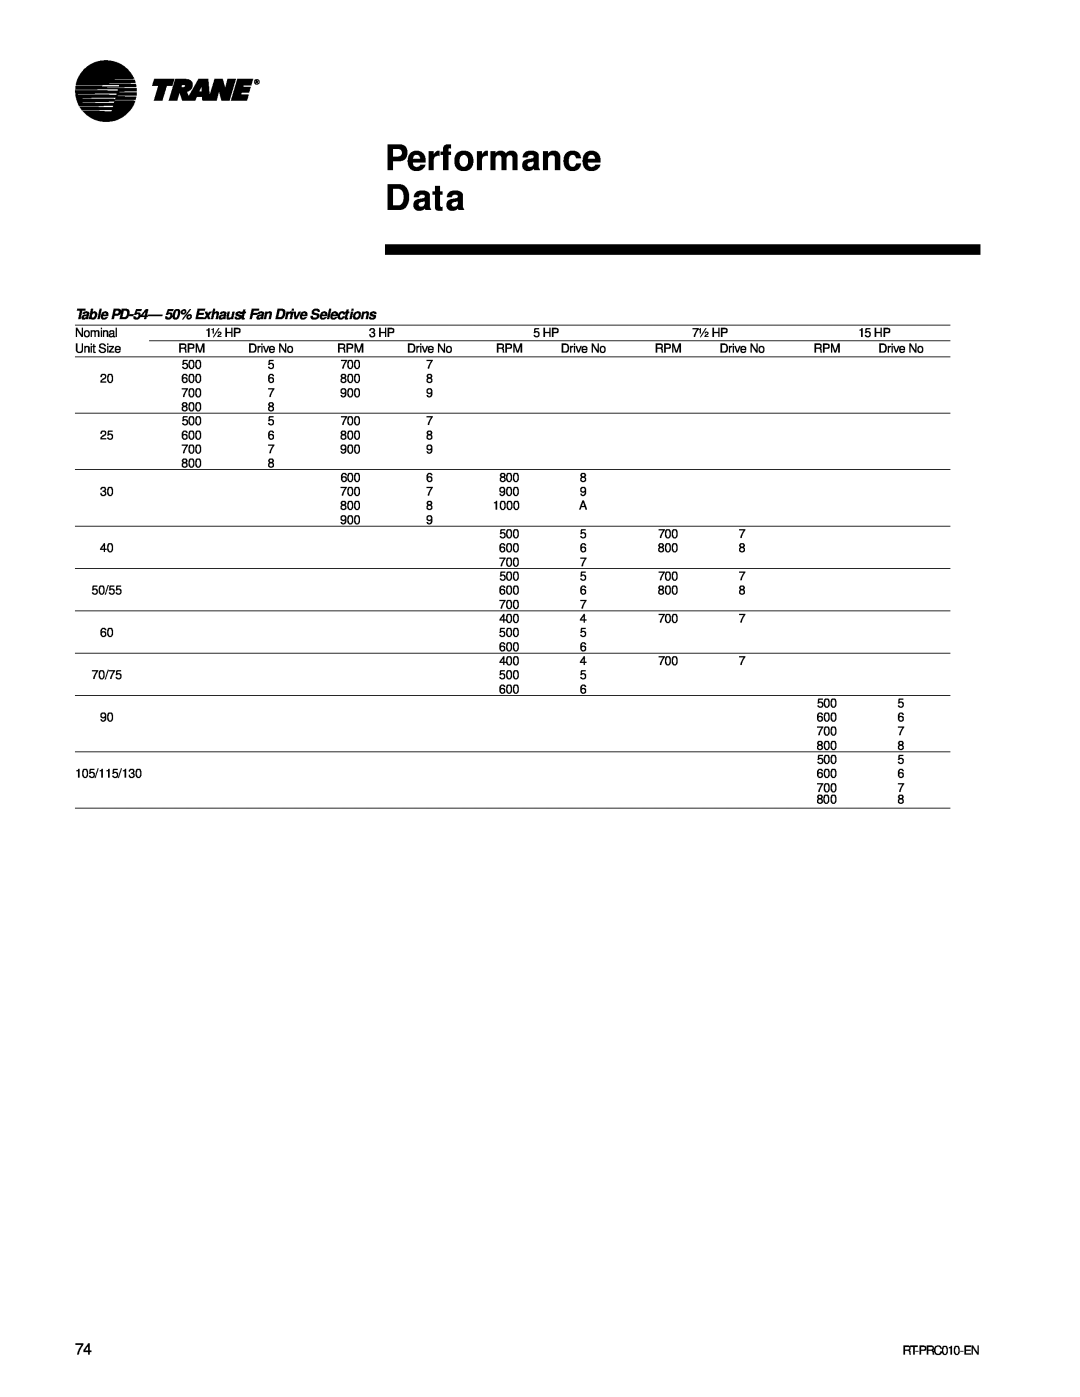 Trane RT-PRC010-EN manual Performance Data, Table PD-54—50% Exhaust Fan Drive Selections 